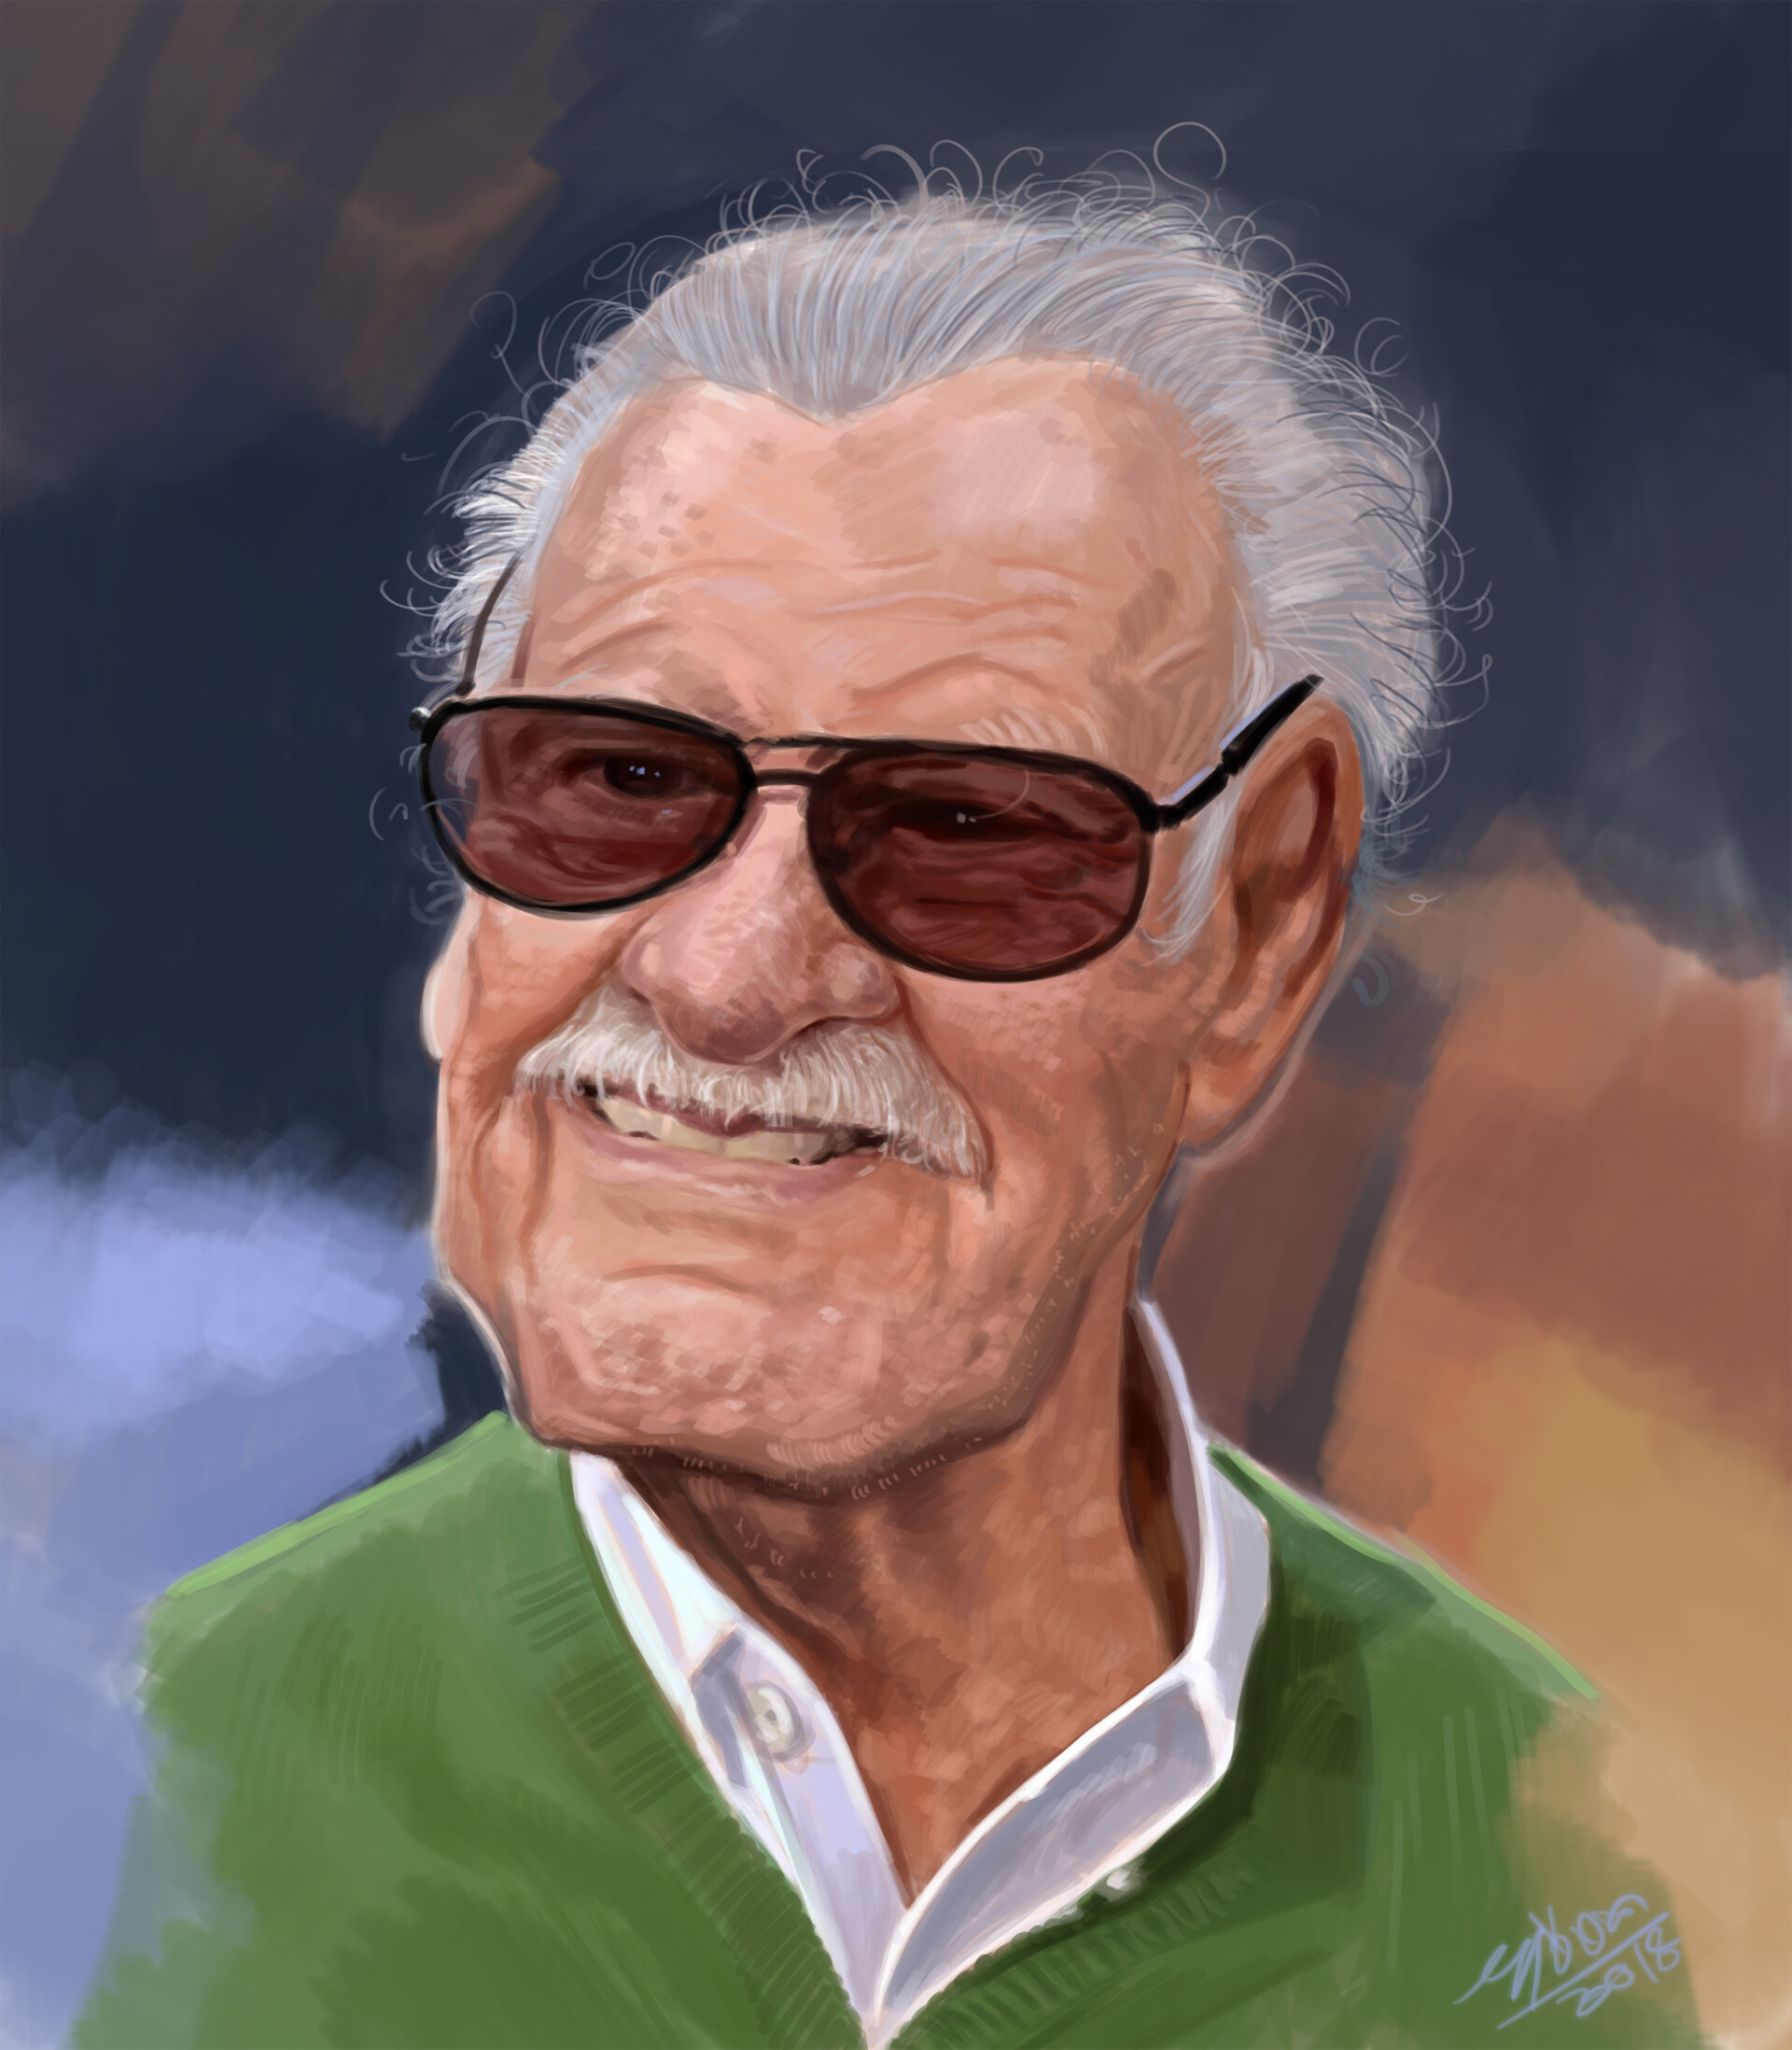 ArtStation - Caricature of Stan Lee